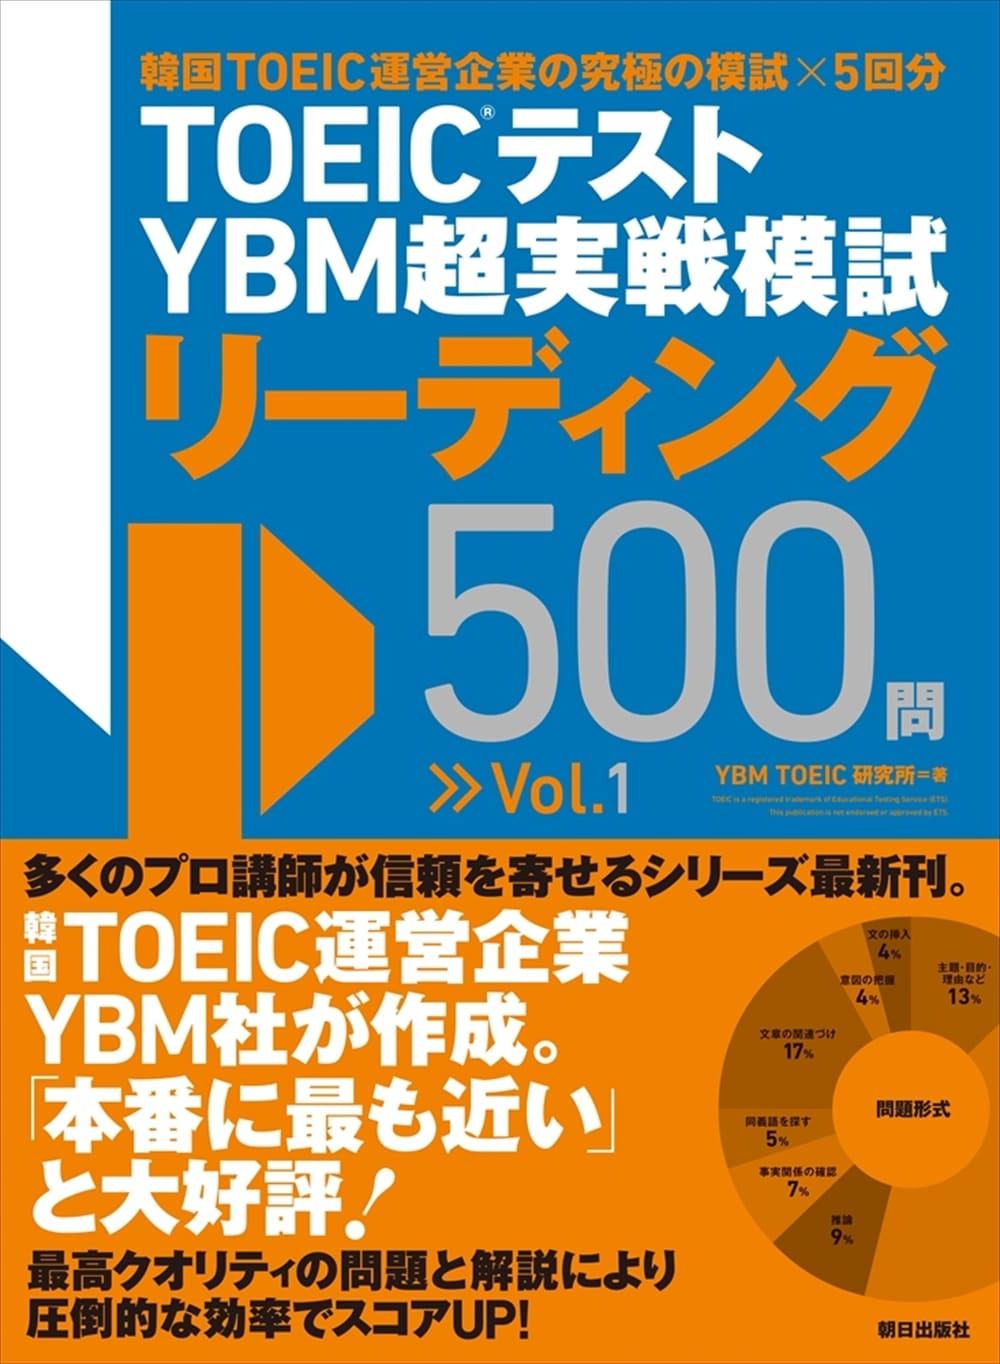 TOEIC(R)テスト YBM<br>超実戦模試リーディング500問Vol.1